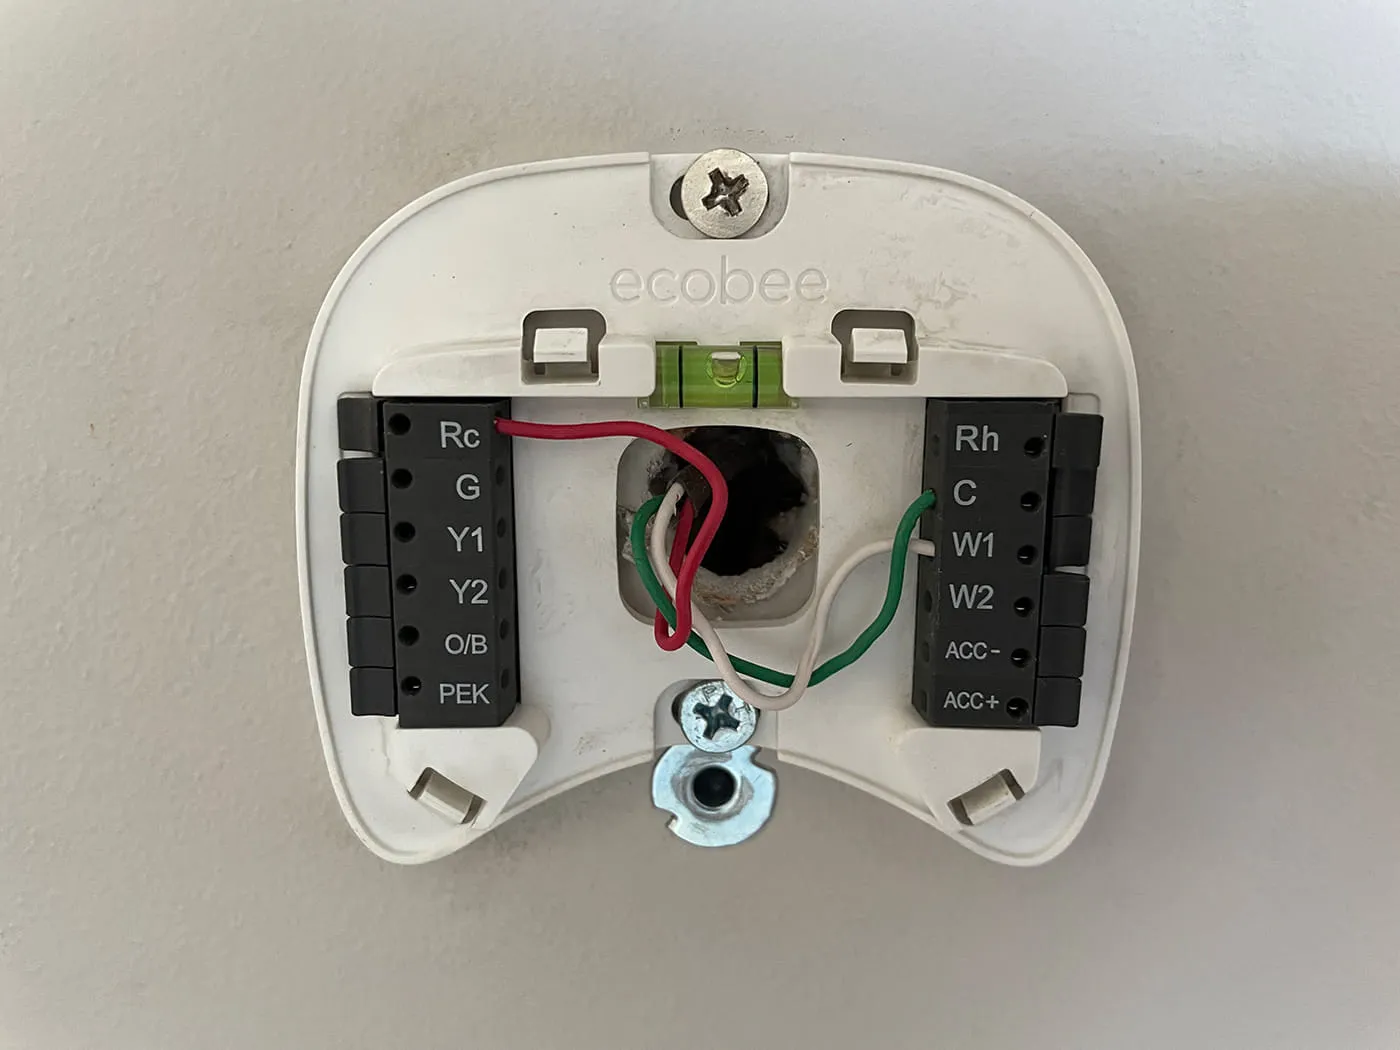 ecobee-thermostat-wiring.jpg